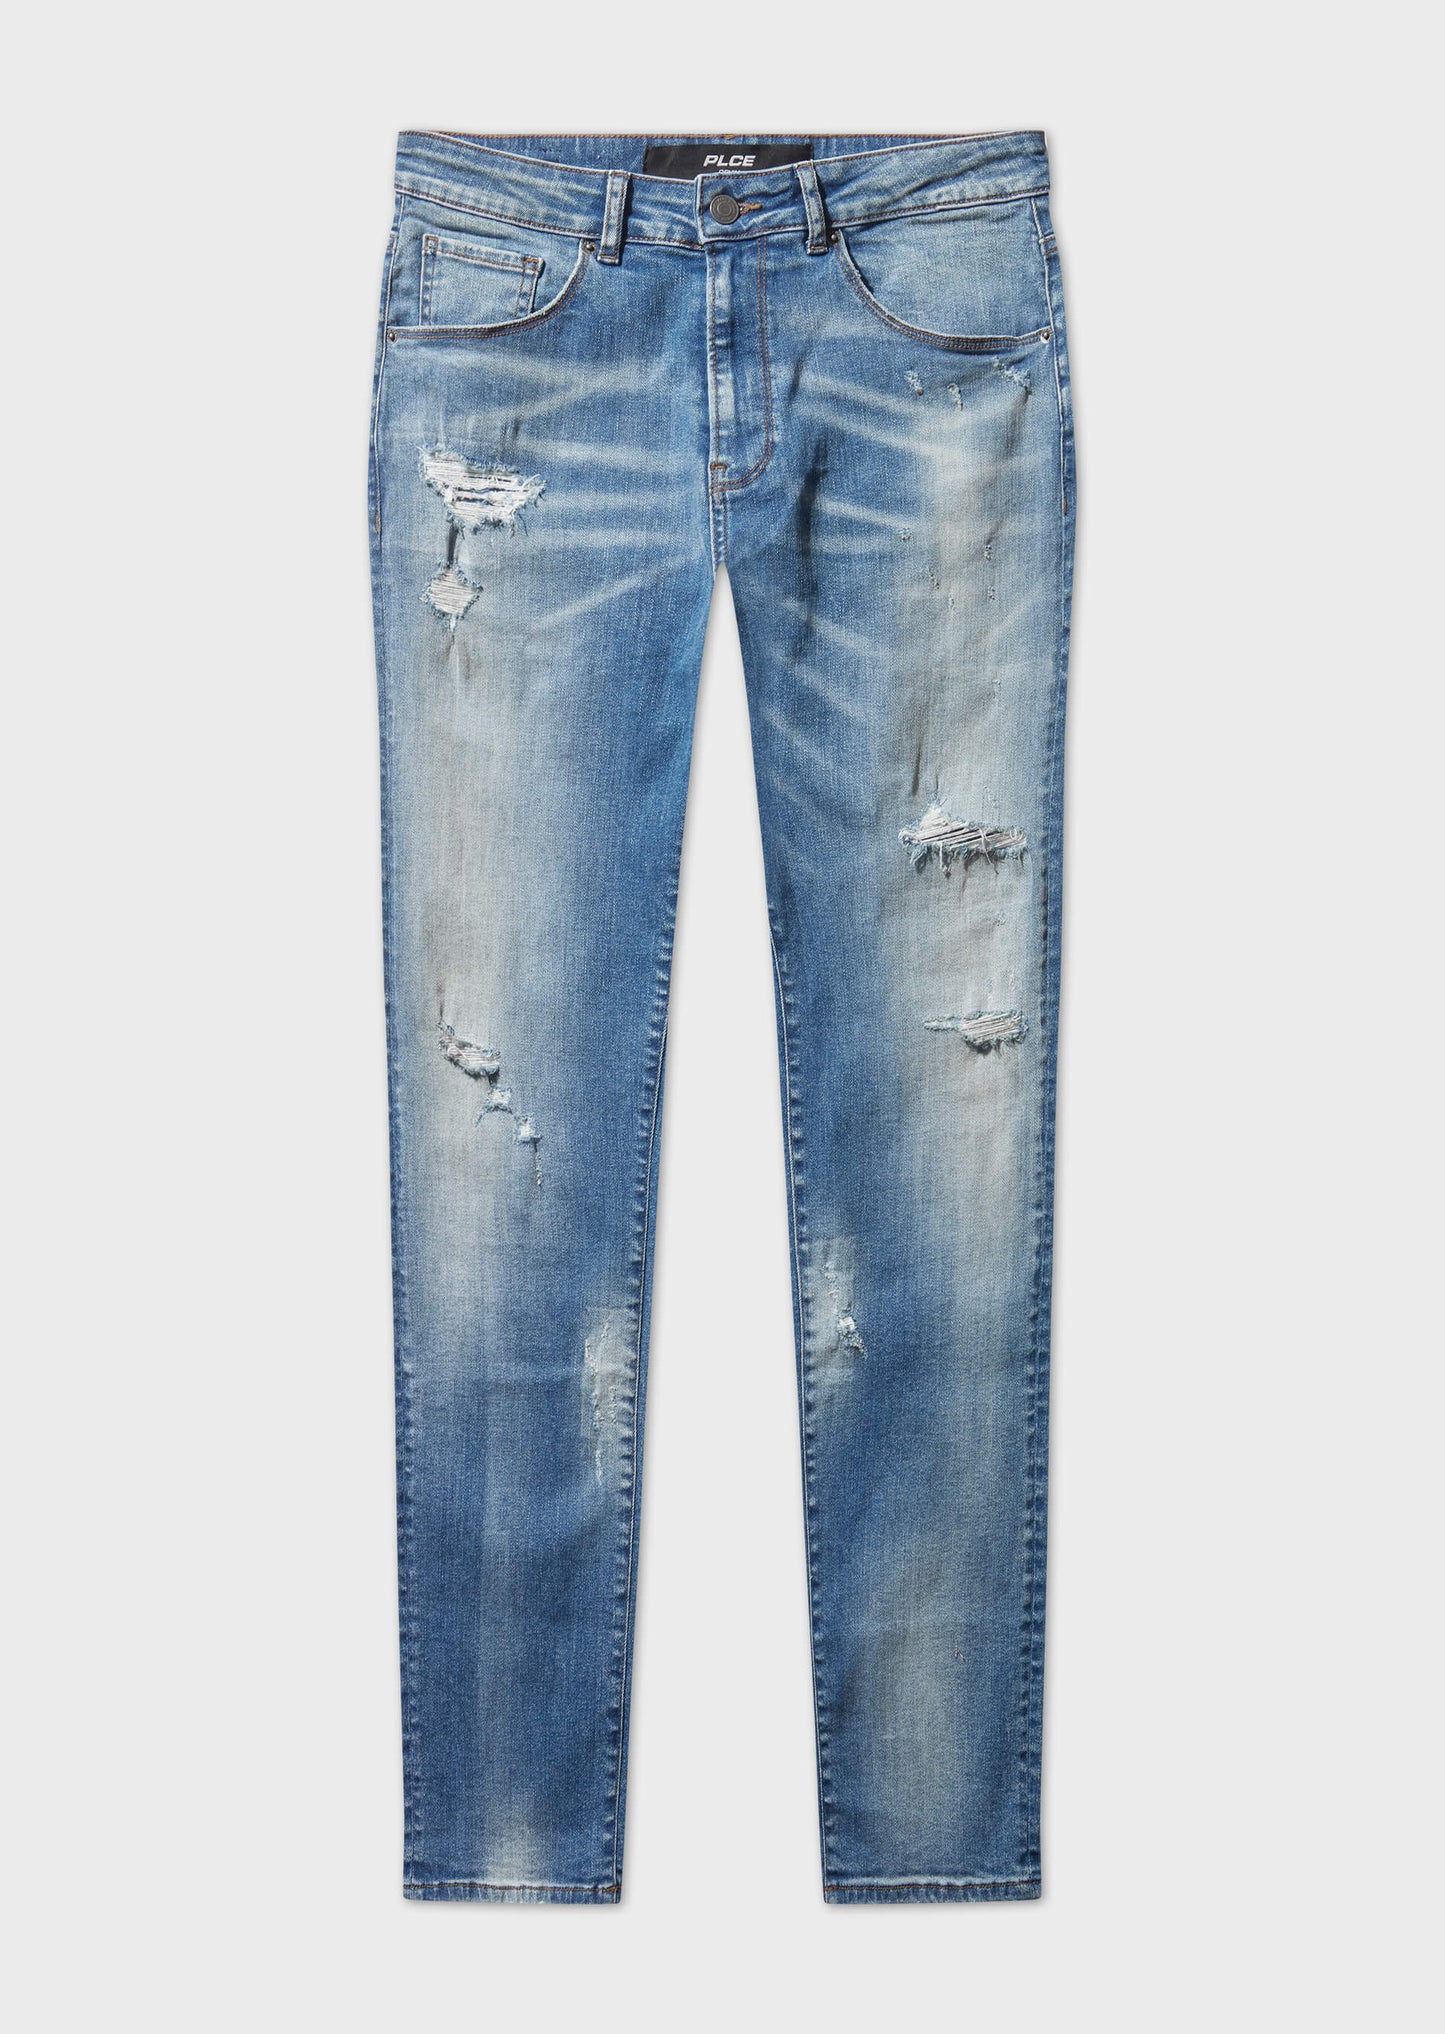 Natron COB 922 Straight Fit Jeans